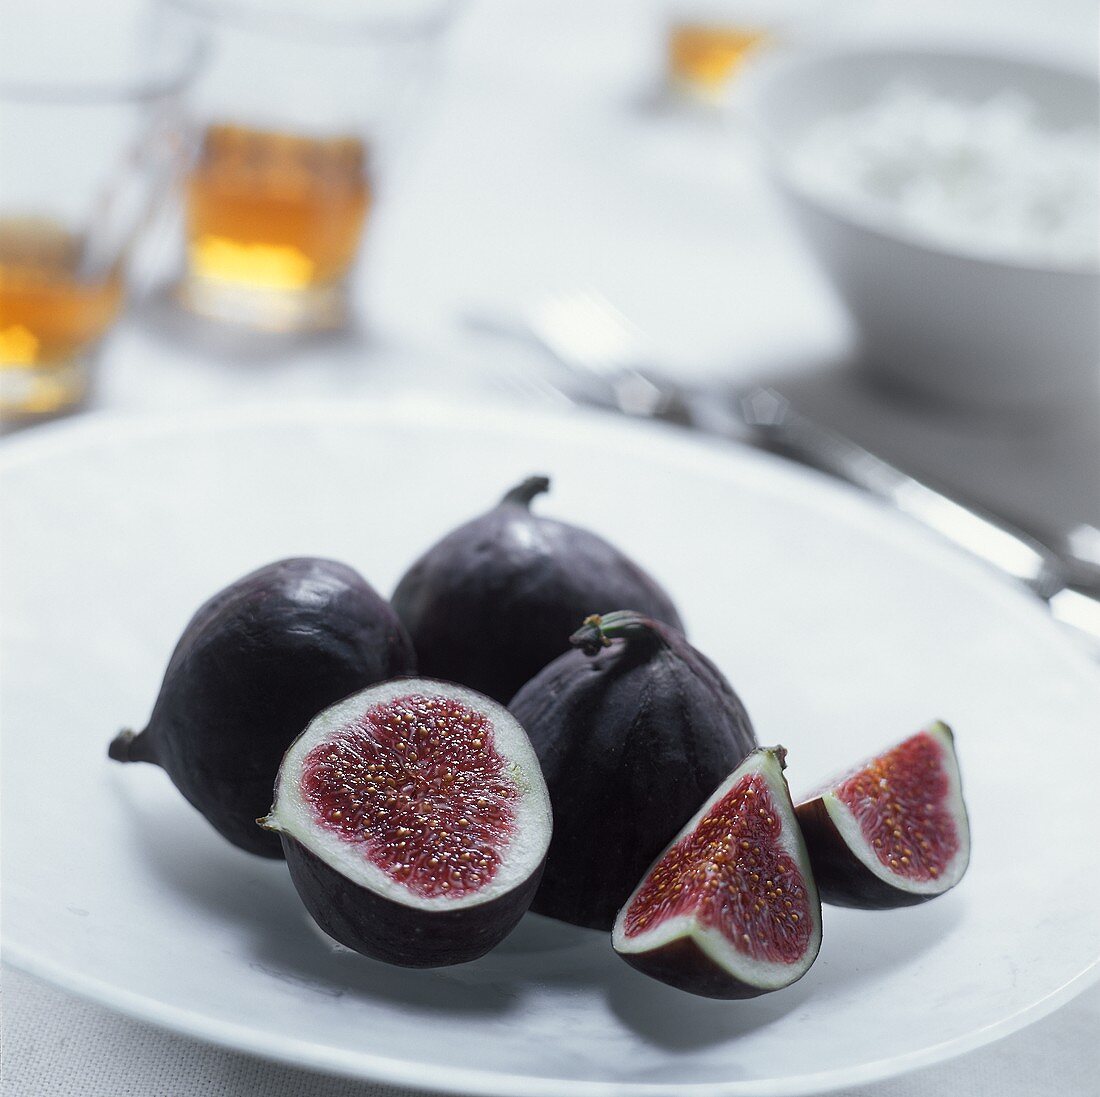 Fresh figs on a plate, one cut open